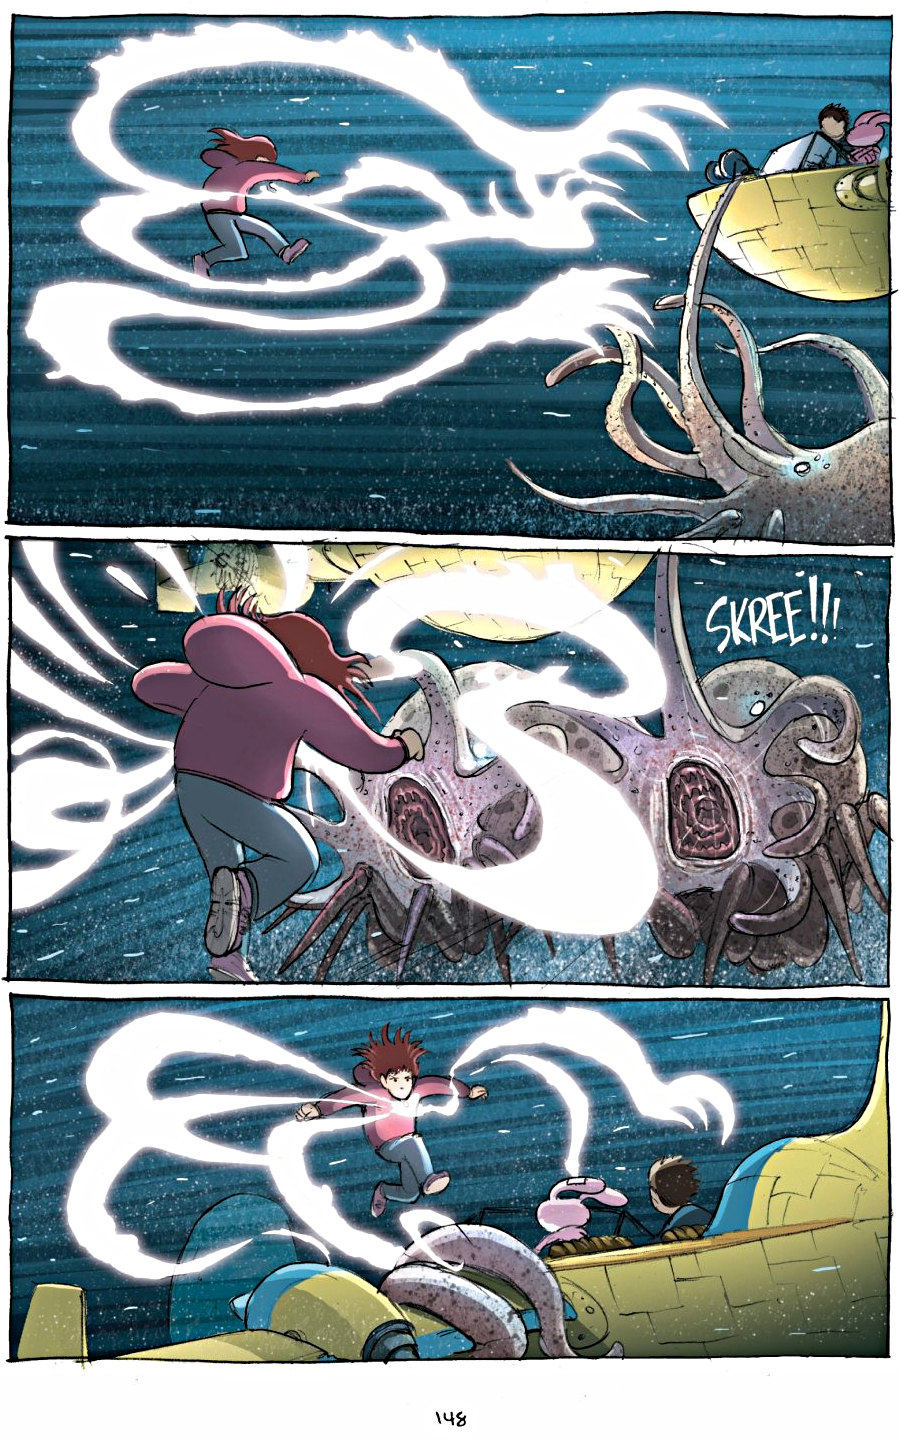 page 148 of amulet 1 stonekeeper graphic novel by kazu kibuishi - read online